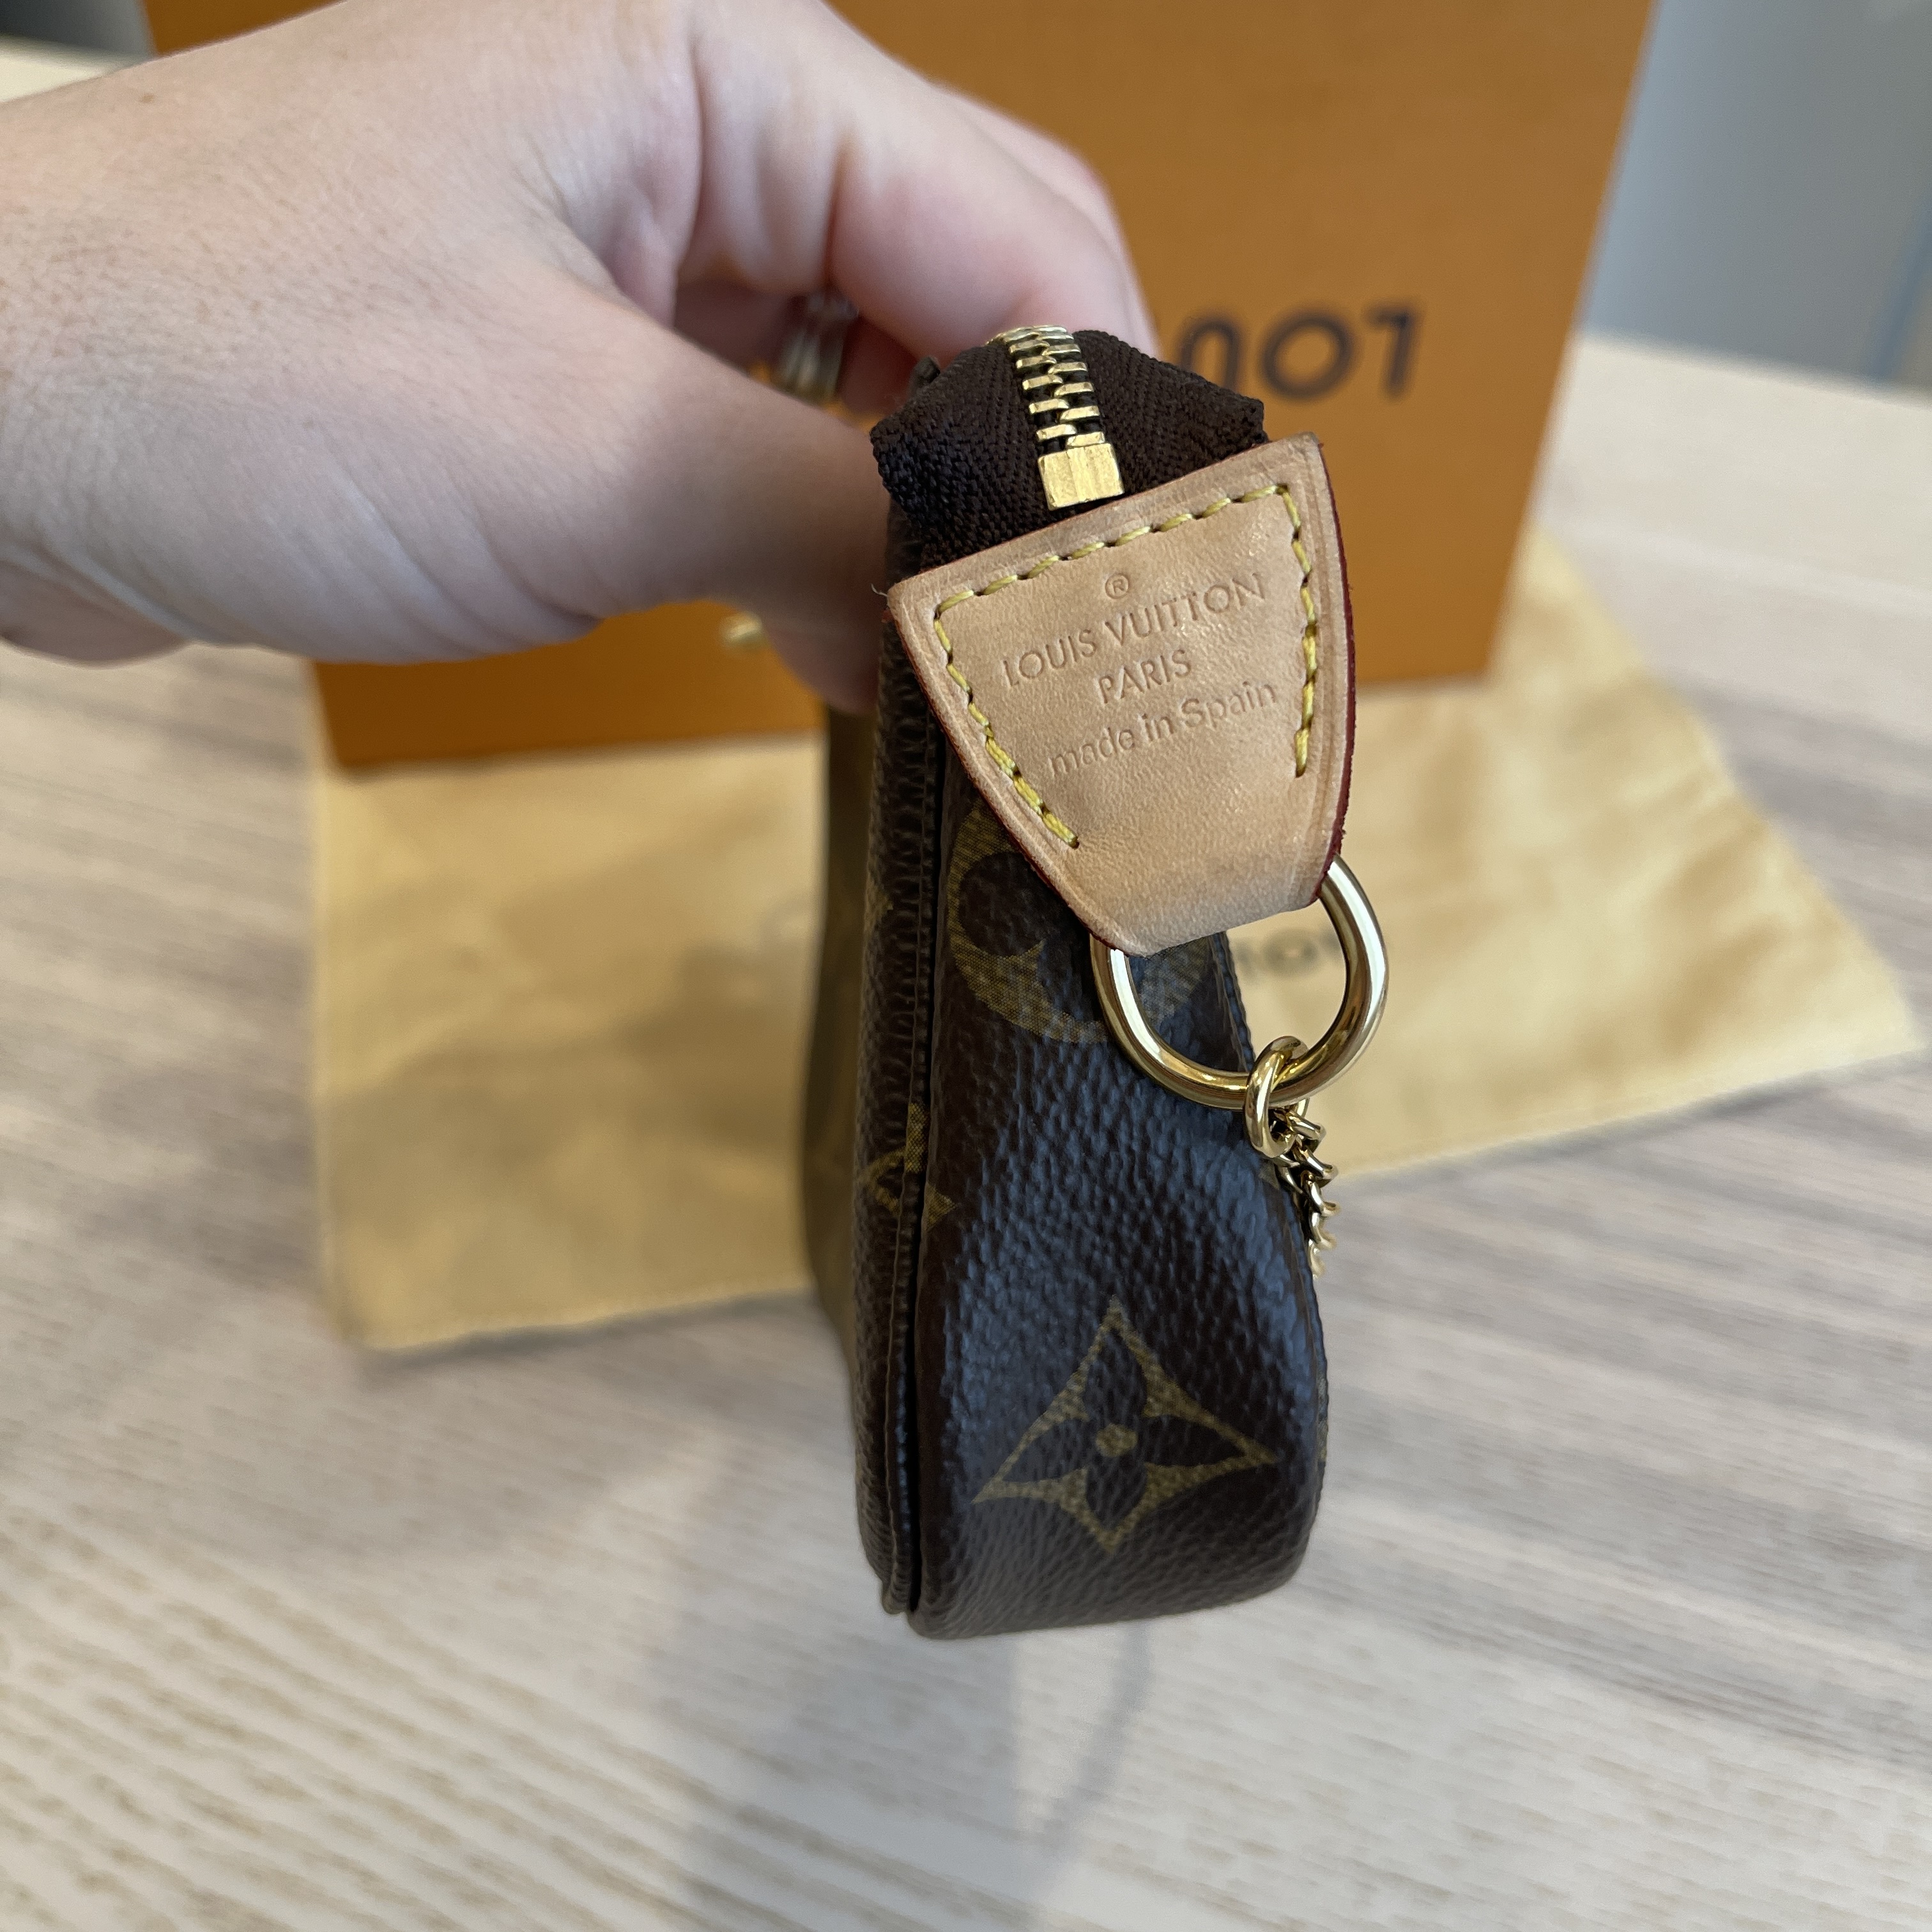 Louis Vuitton Pochette Bag, Authenticity Guaranteed